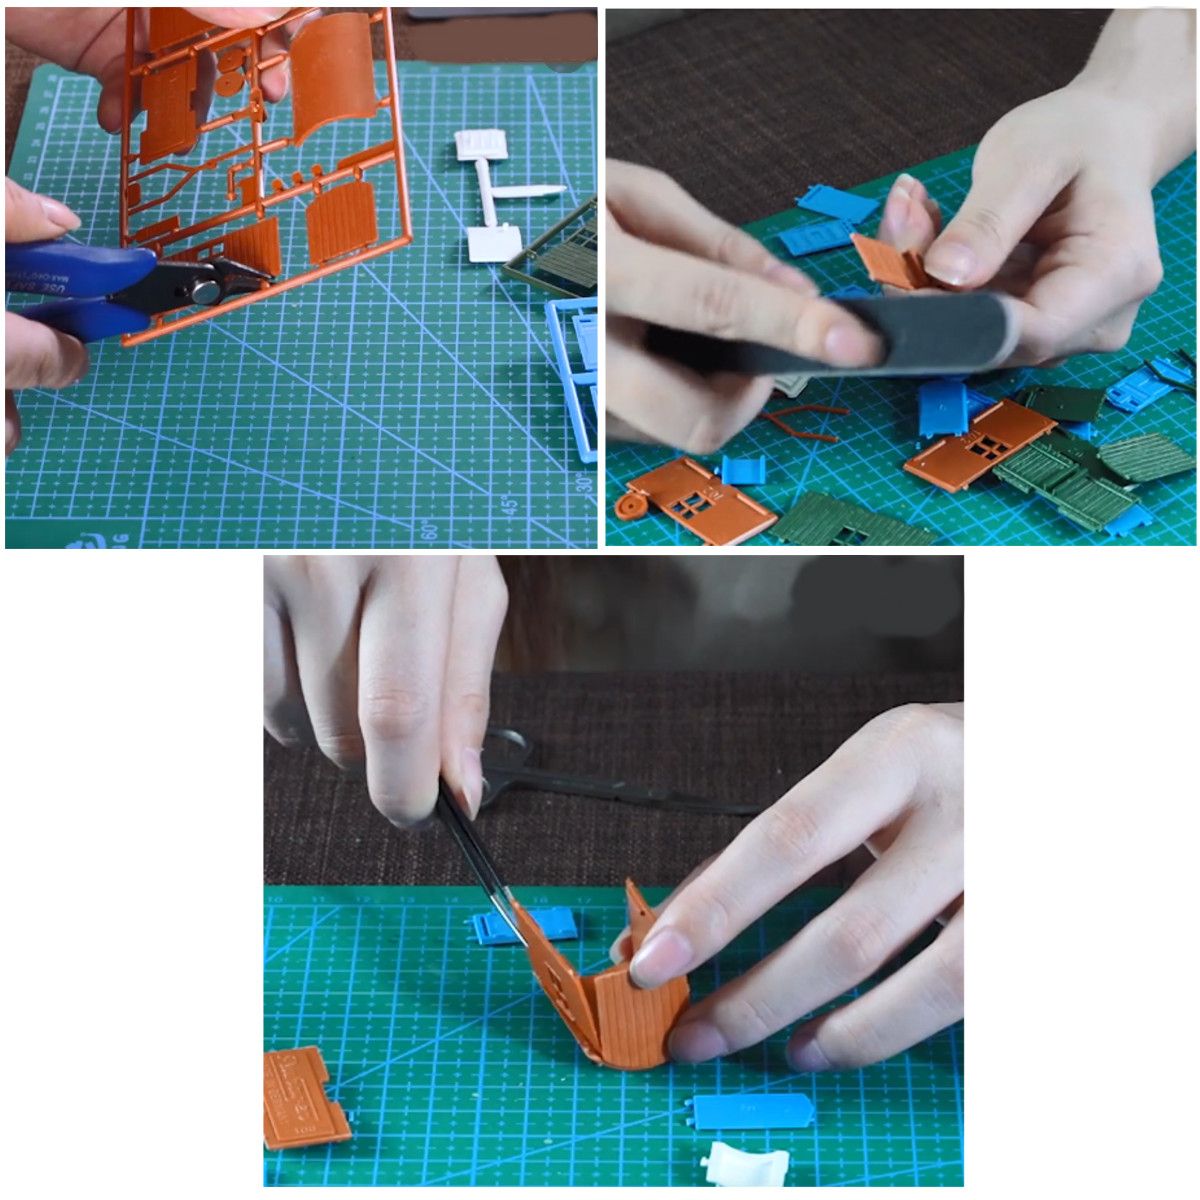 7Pcs-DIY-Gundam-Modeler-Basic-Tools-Set-Craft-Hobby-Building-Model-Grinding-For-Gundam-1631682